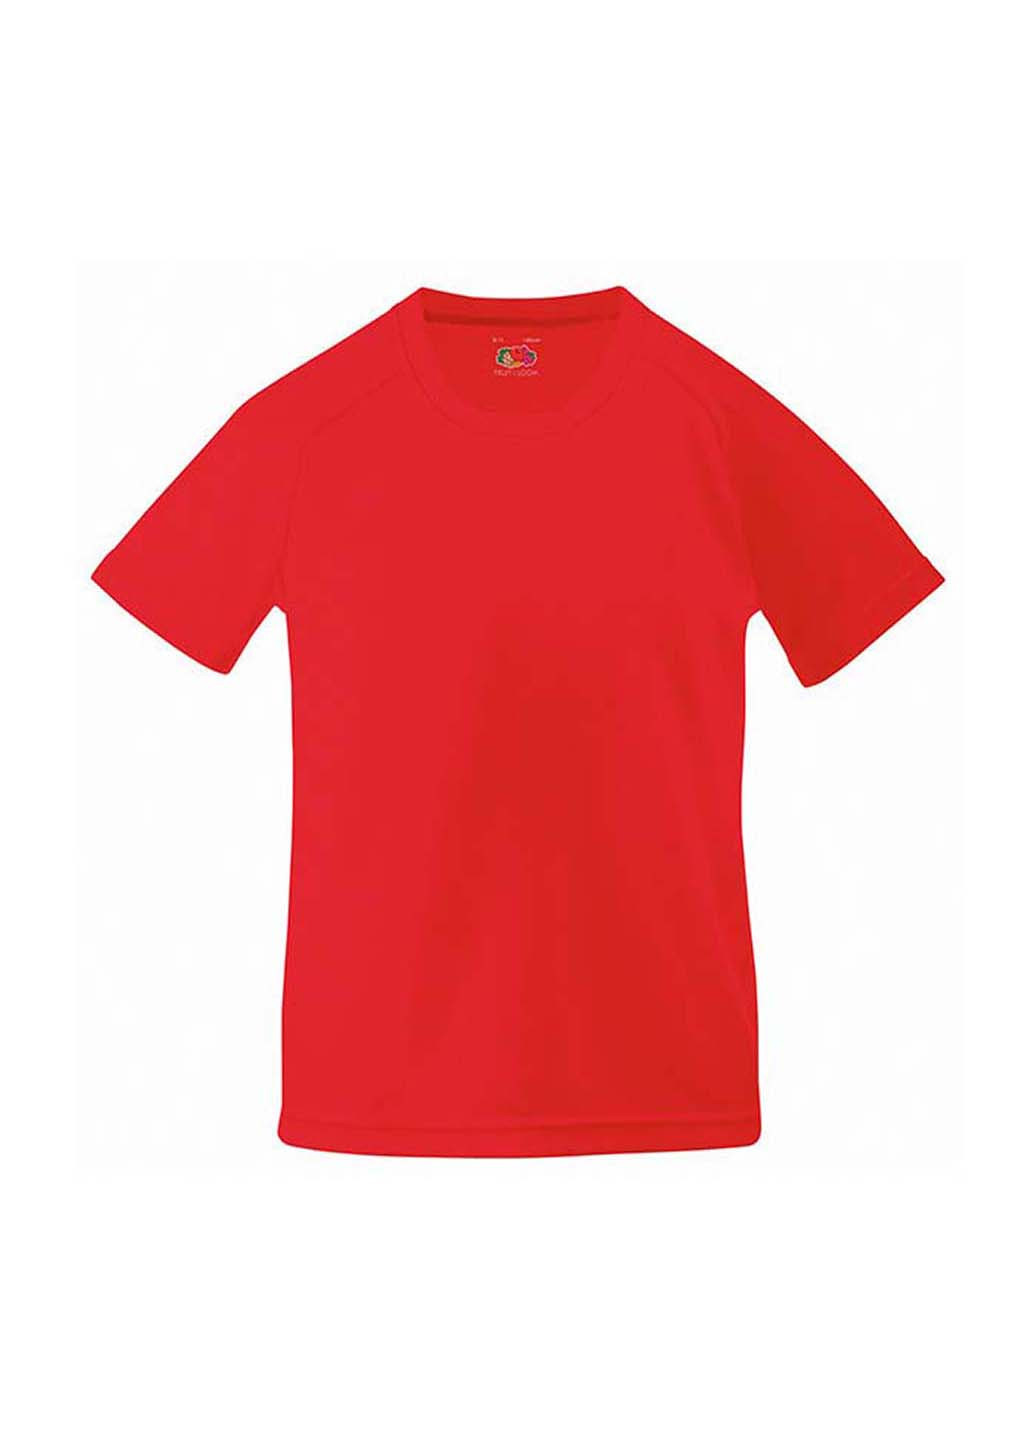 Красная демисезонная футболка Fruit of the Loom D061013040164